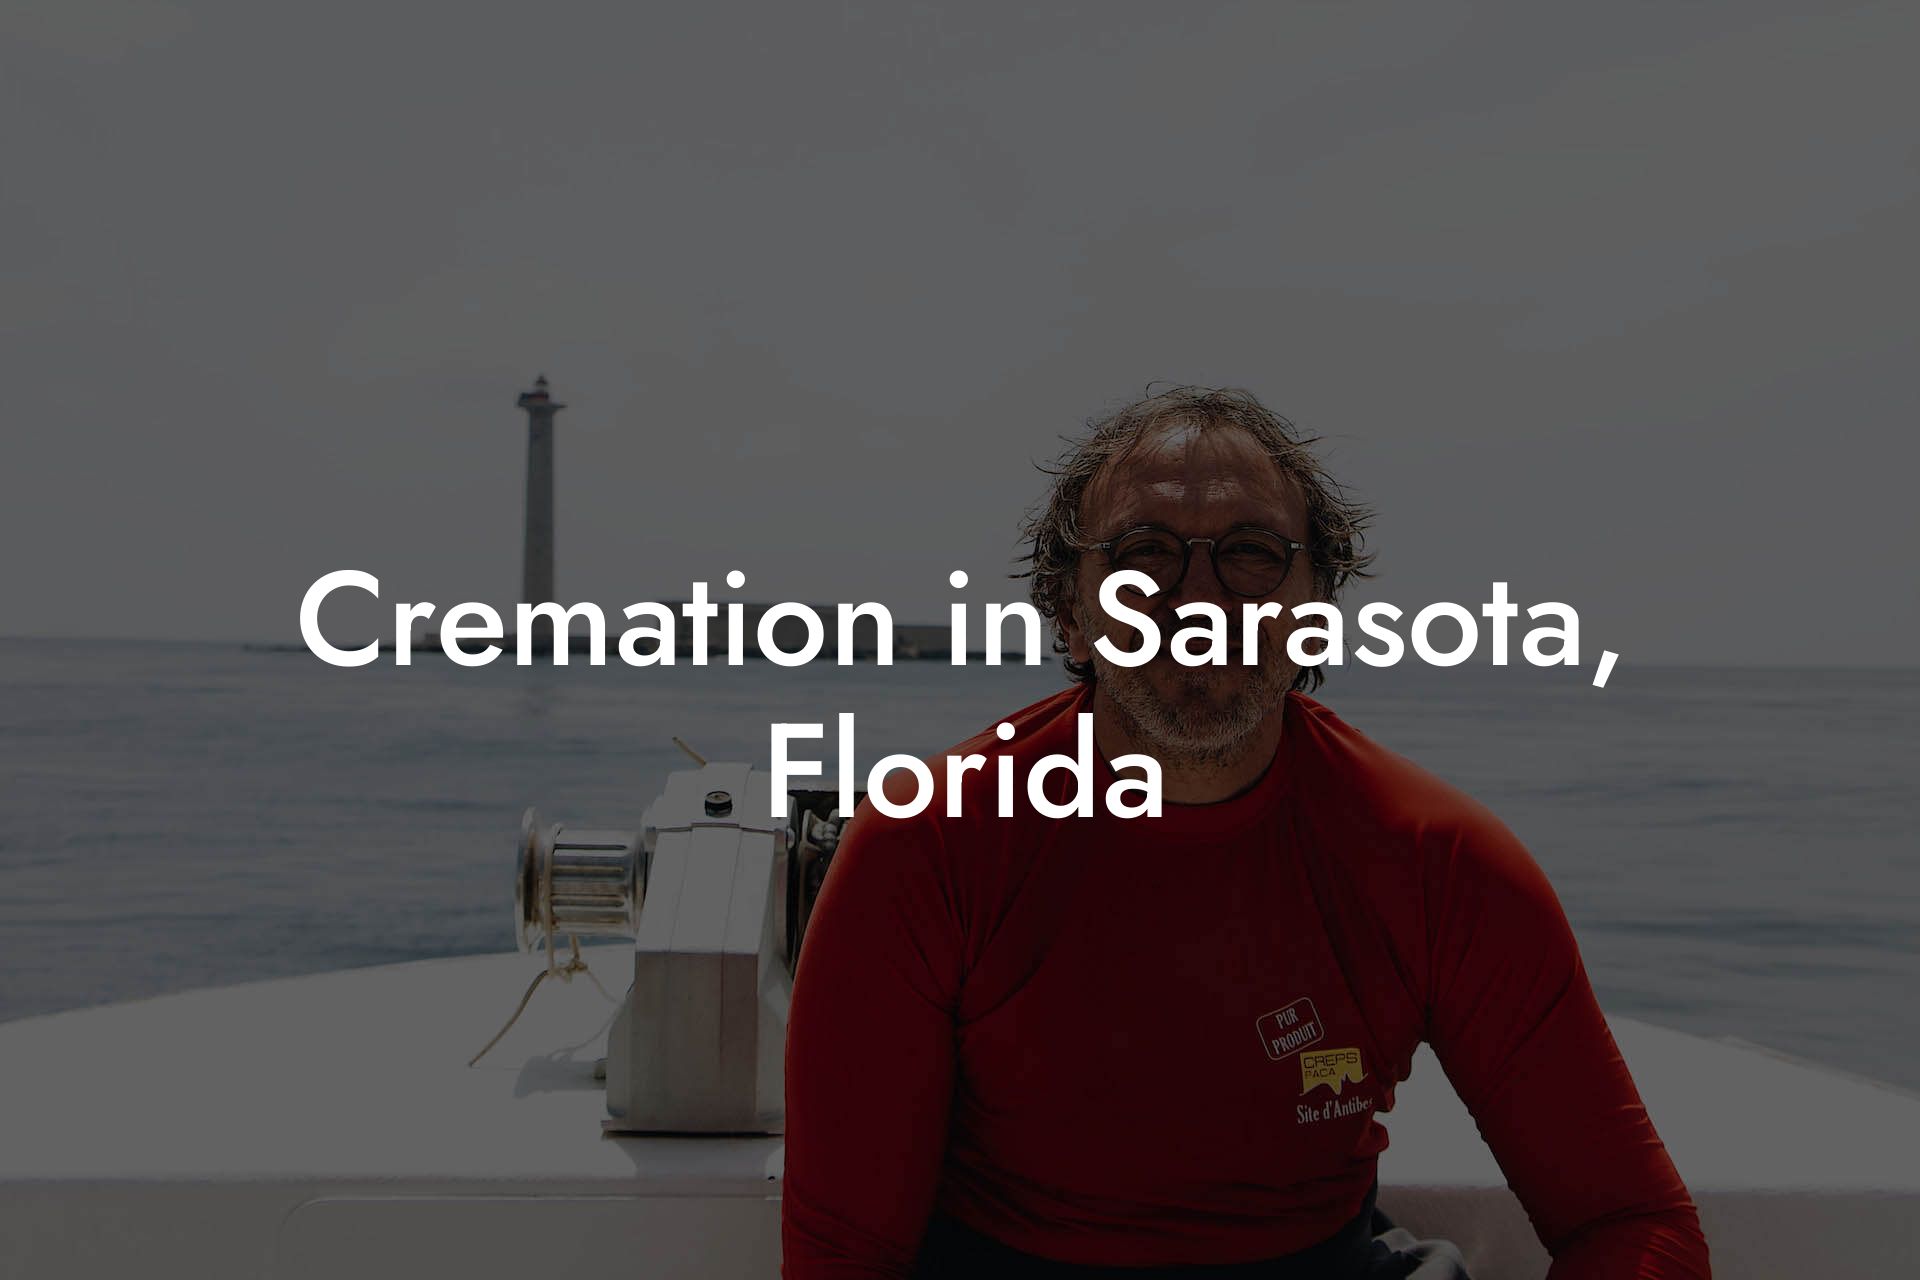 Cremation in Sarasota, Florida